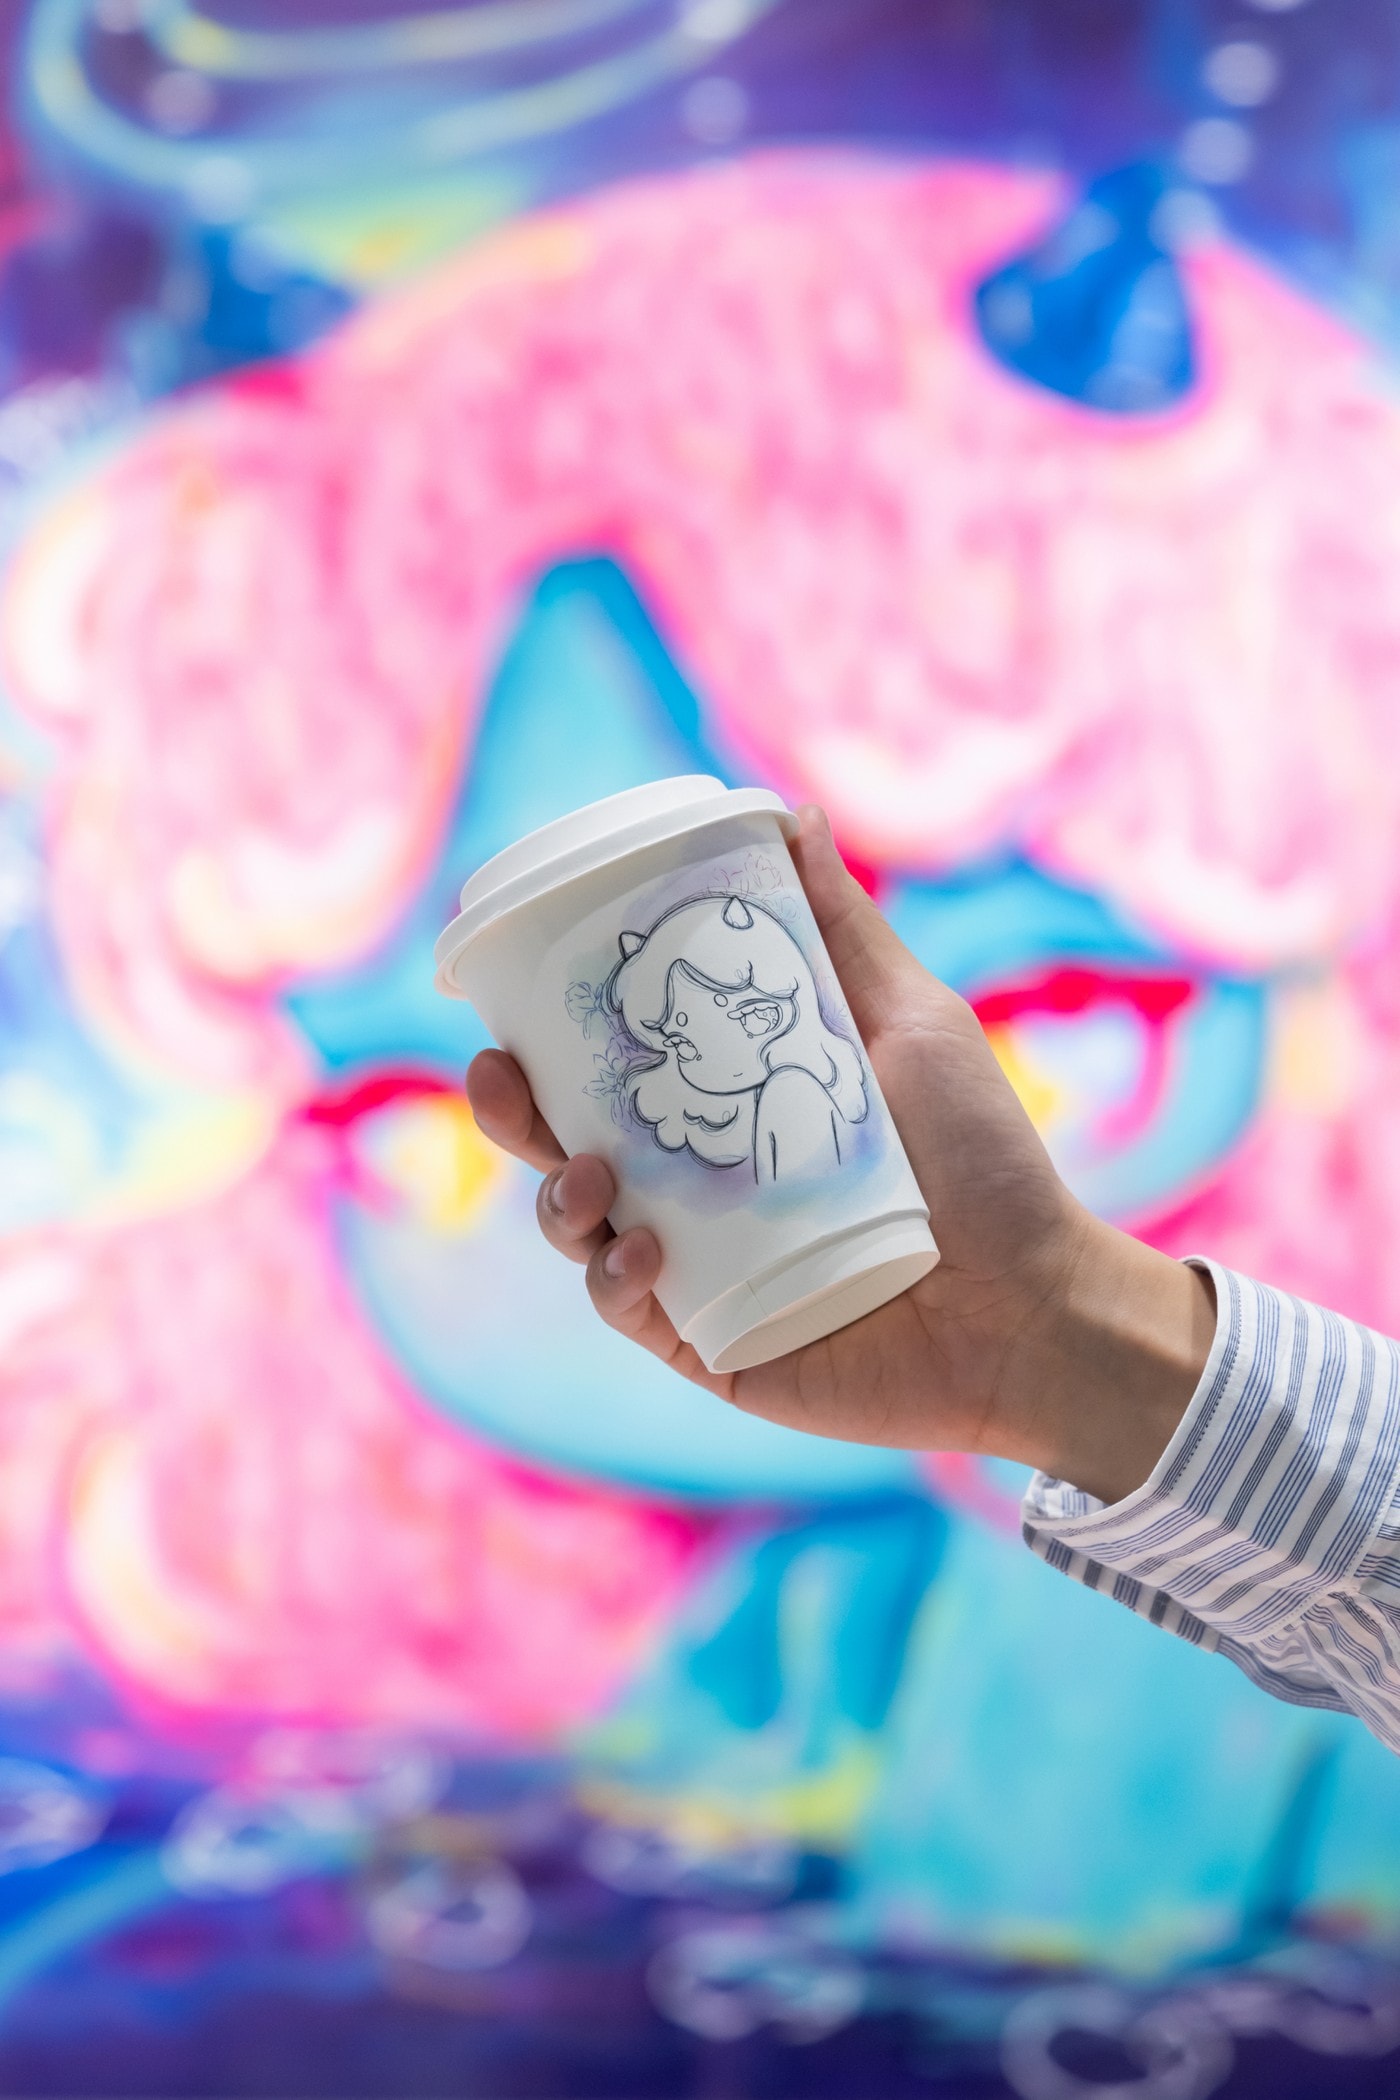 Hypebeans 攜手西班牙藝術家 Okokume 打造全新 Cosmic Girl 咖啡藝術空間